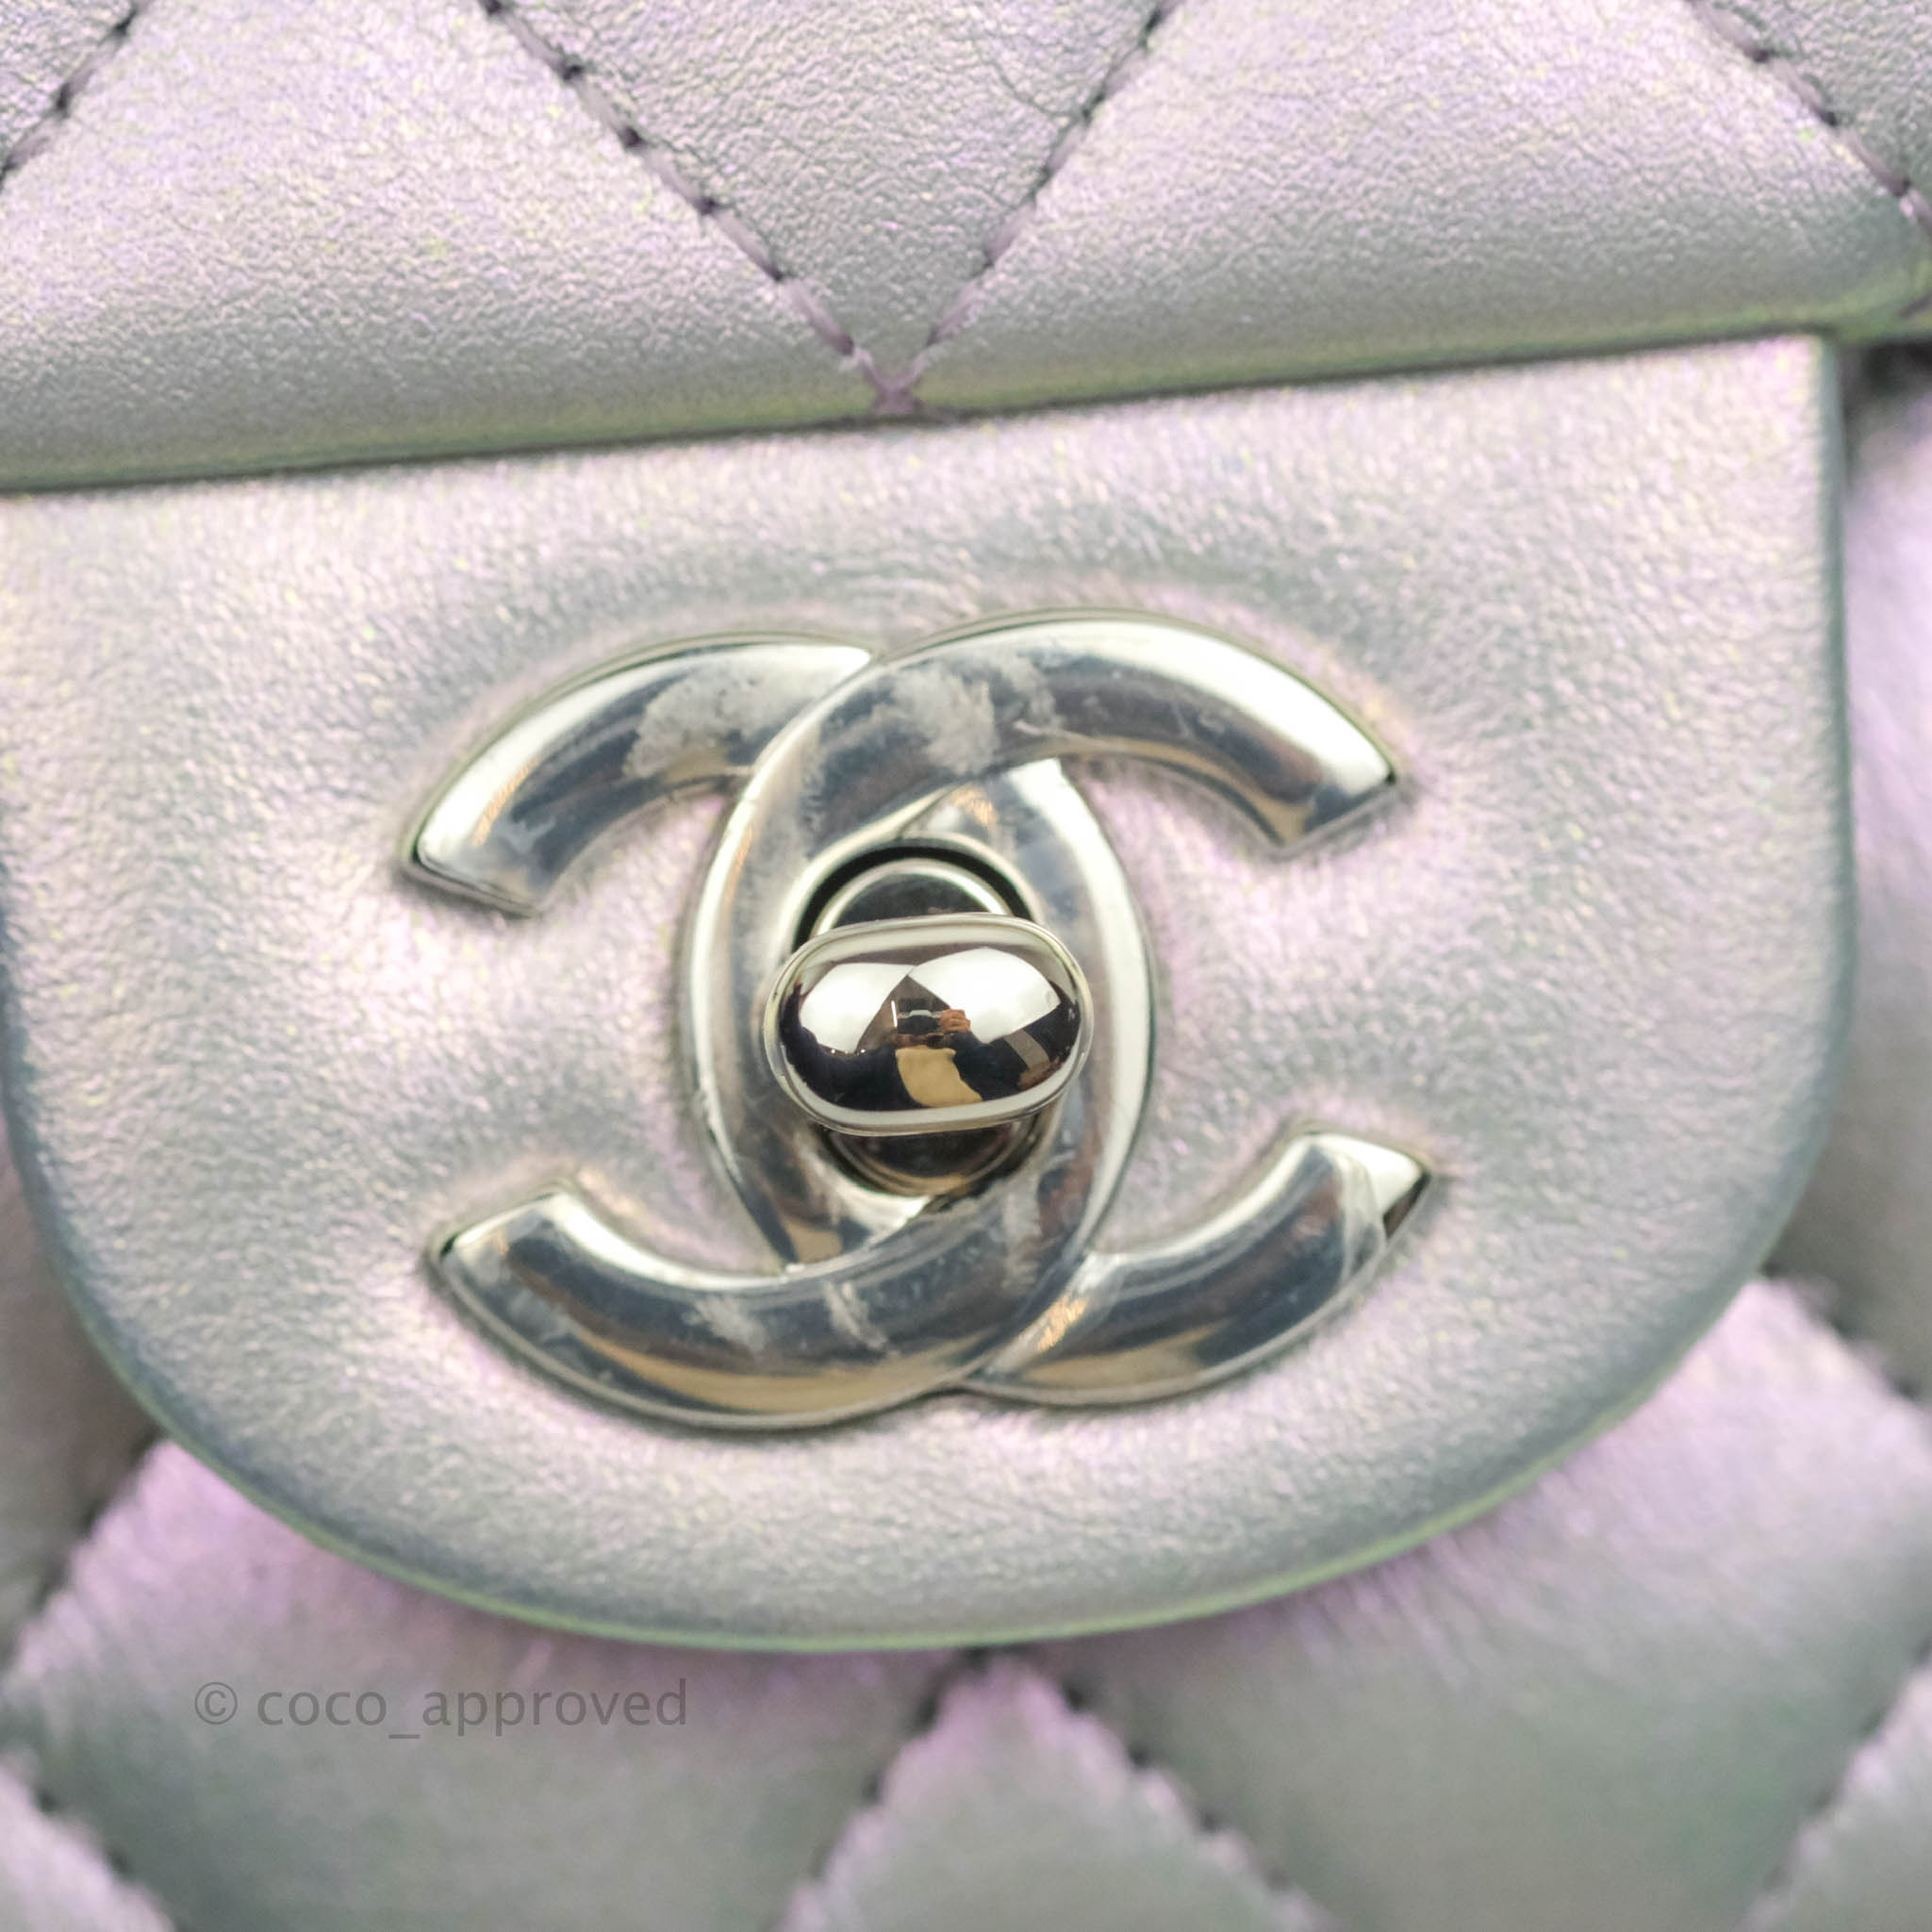 NIB 22C Chanel Pale Violet Square Mini Pearl My Perfect Flap Bag SHW –  Boutique Patina